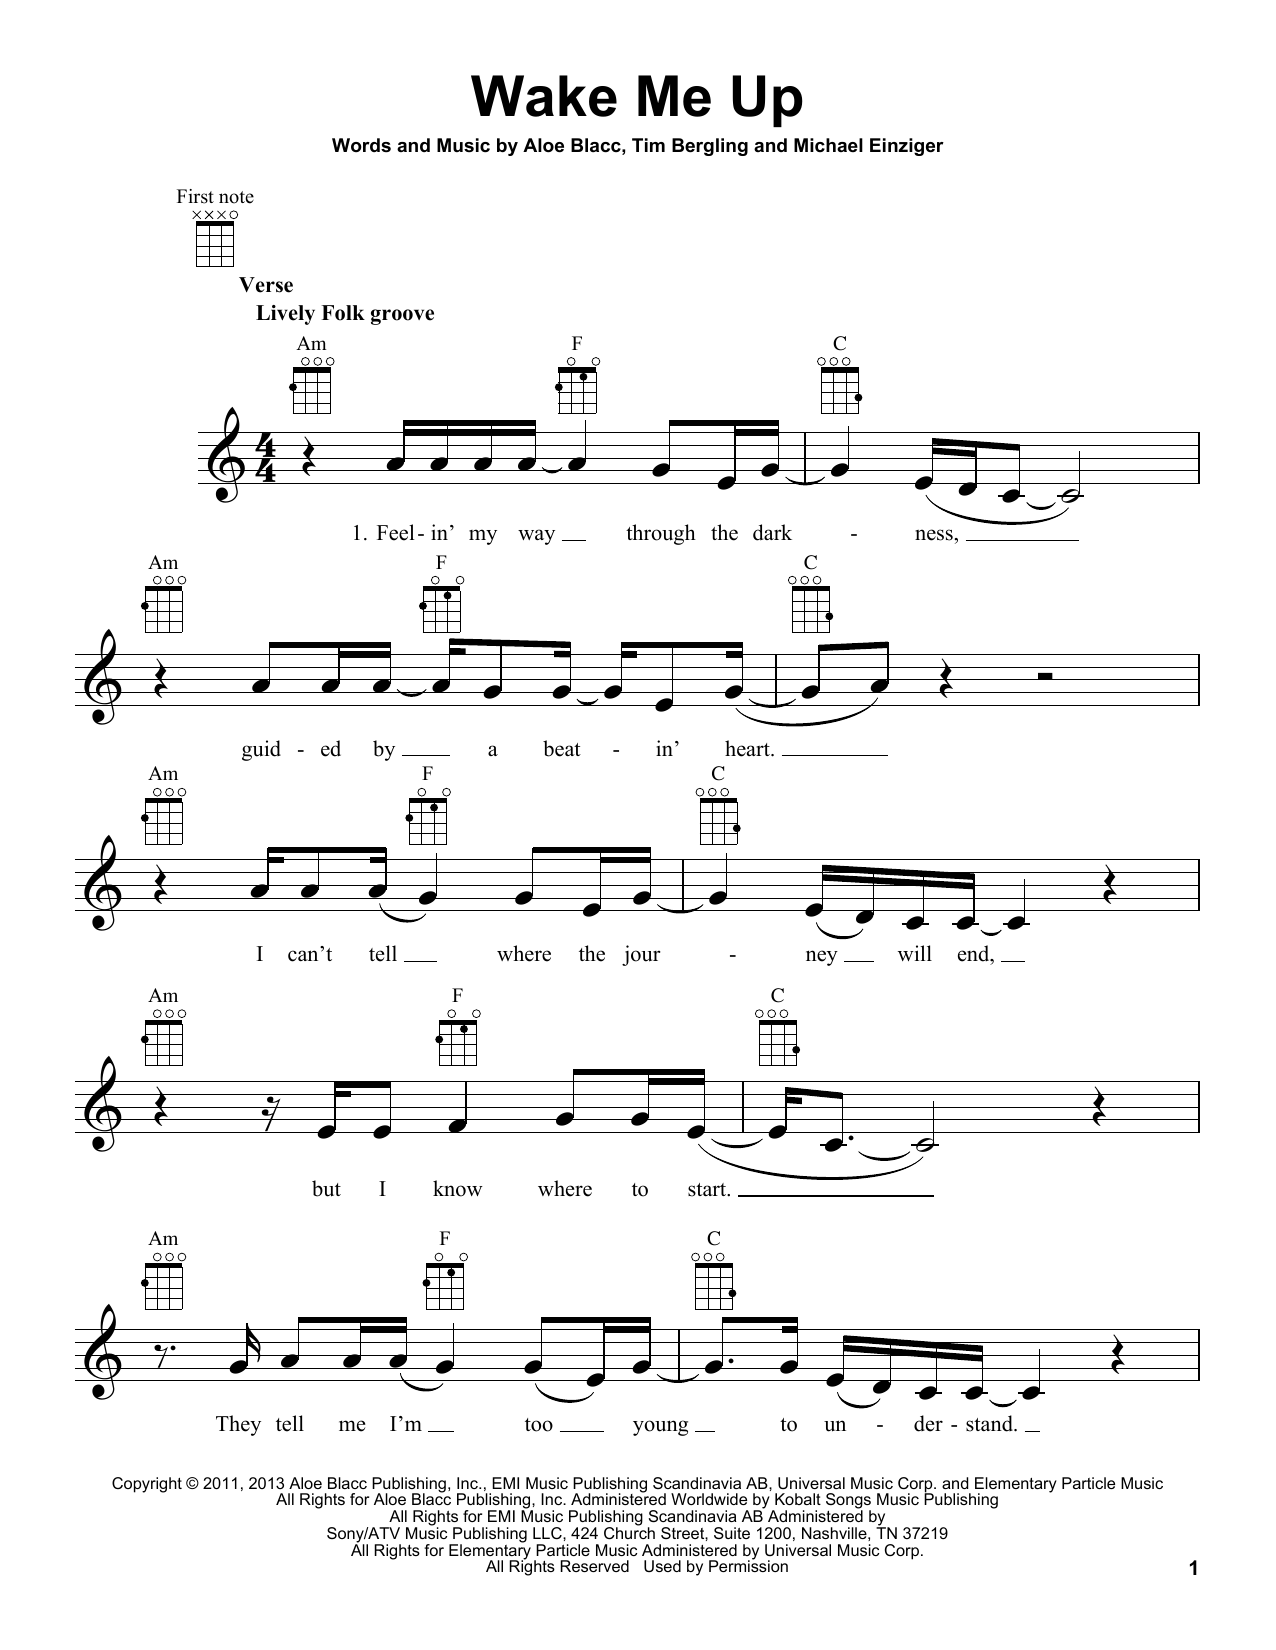 Avicii Wake Me Up sheet music notes and chords. Download Printable PDF.